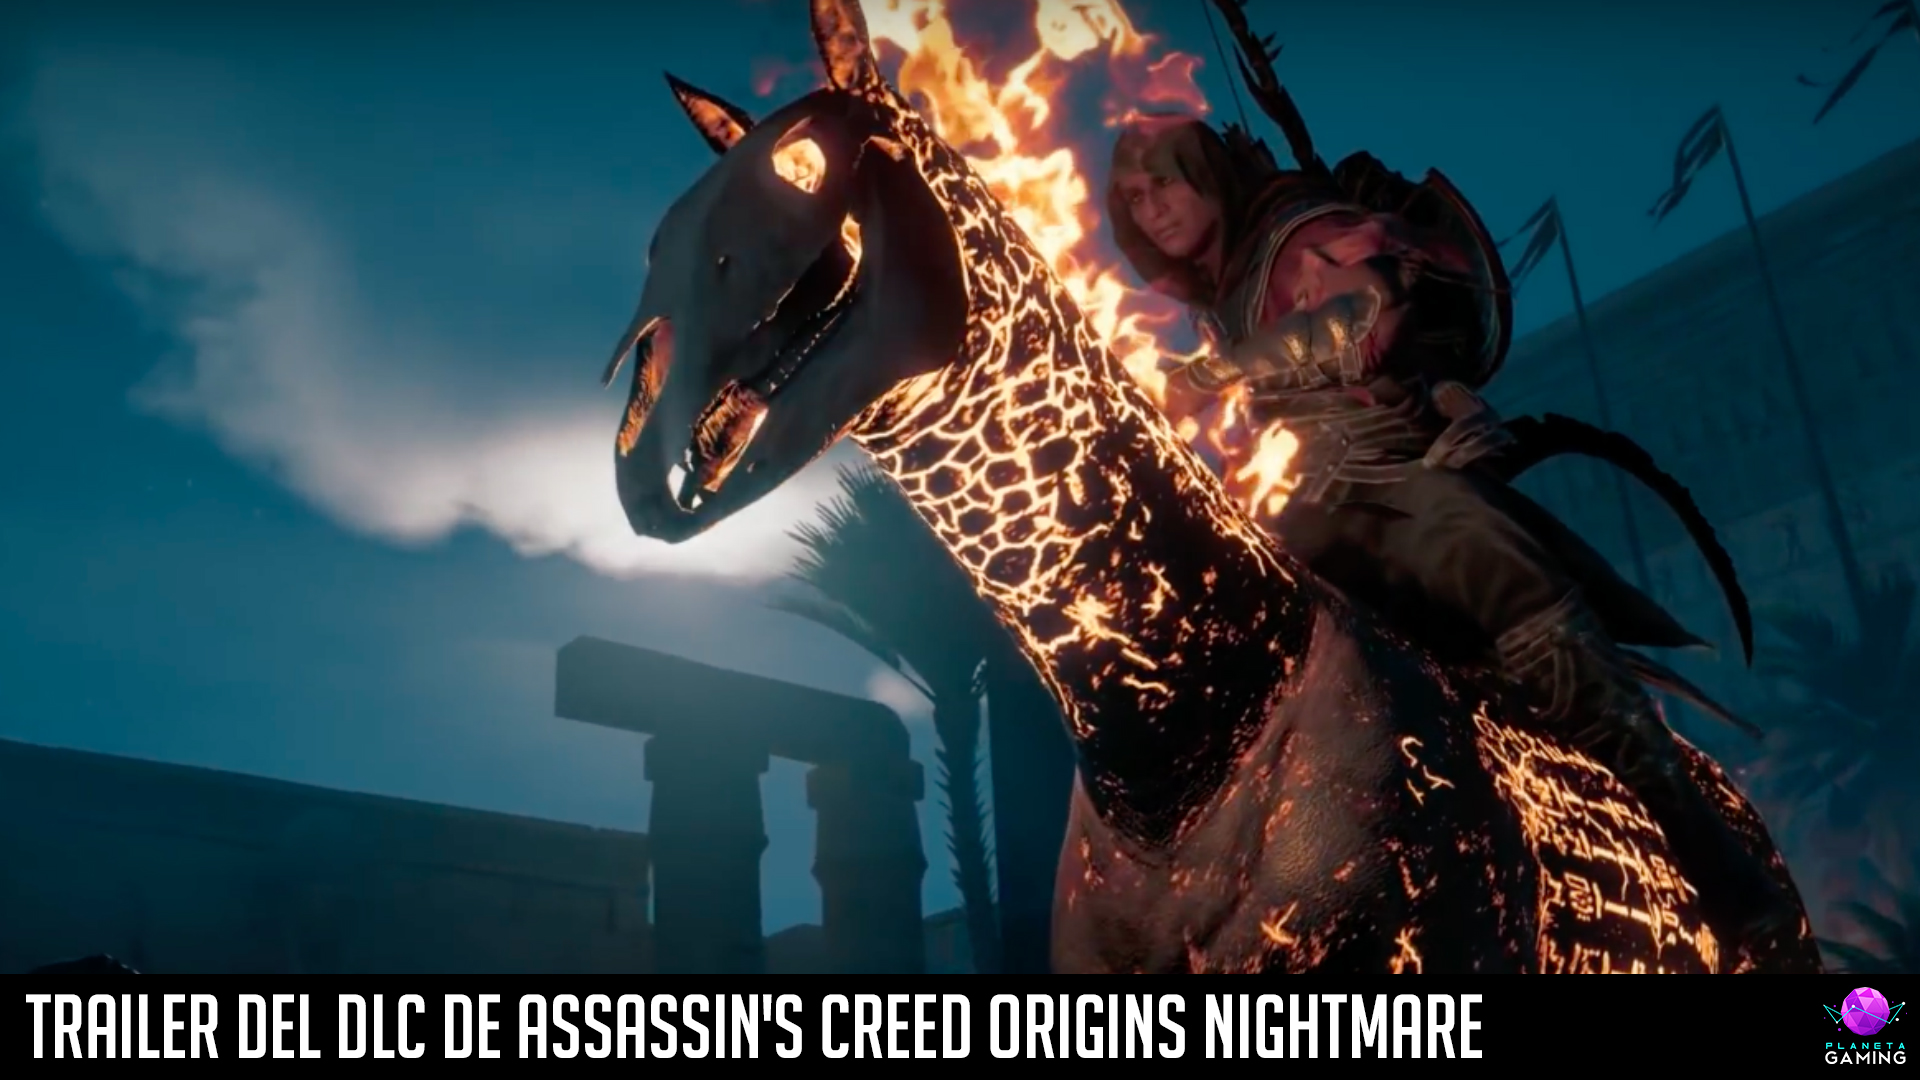 Trailer del DLC de Assassin's Creed Origins Nightmare